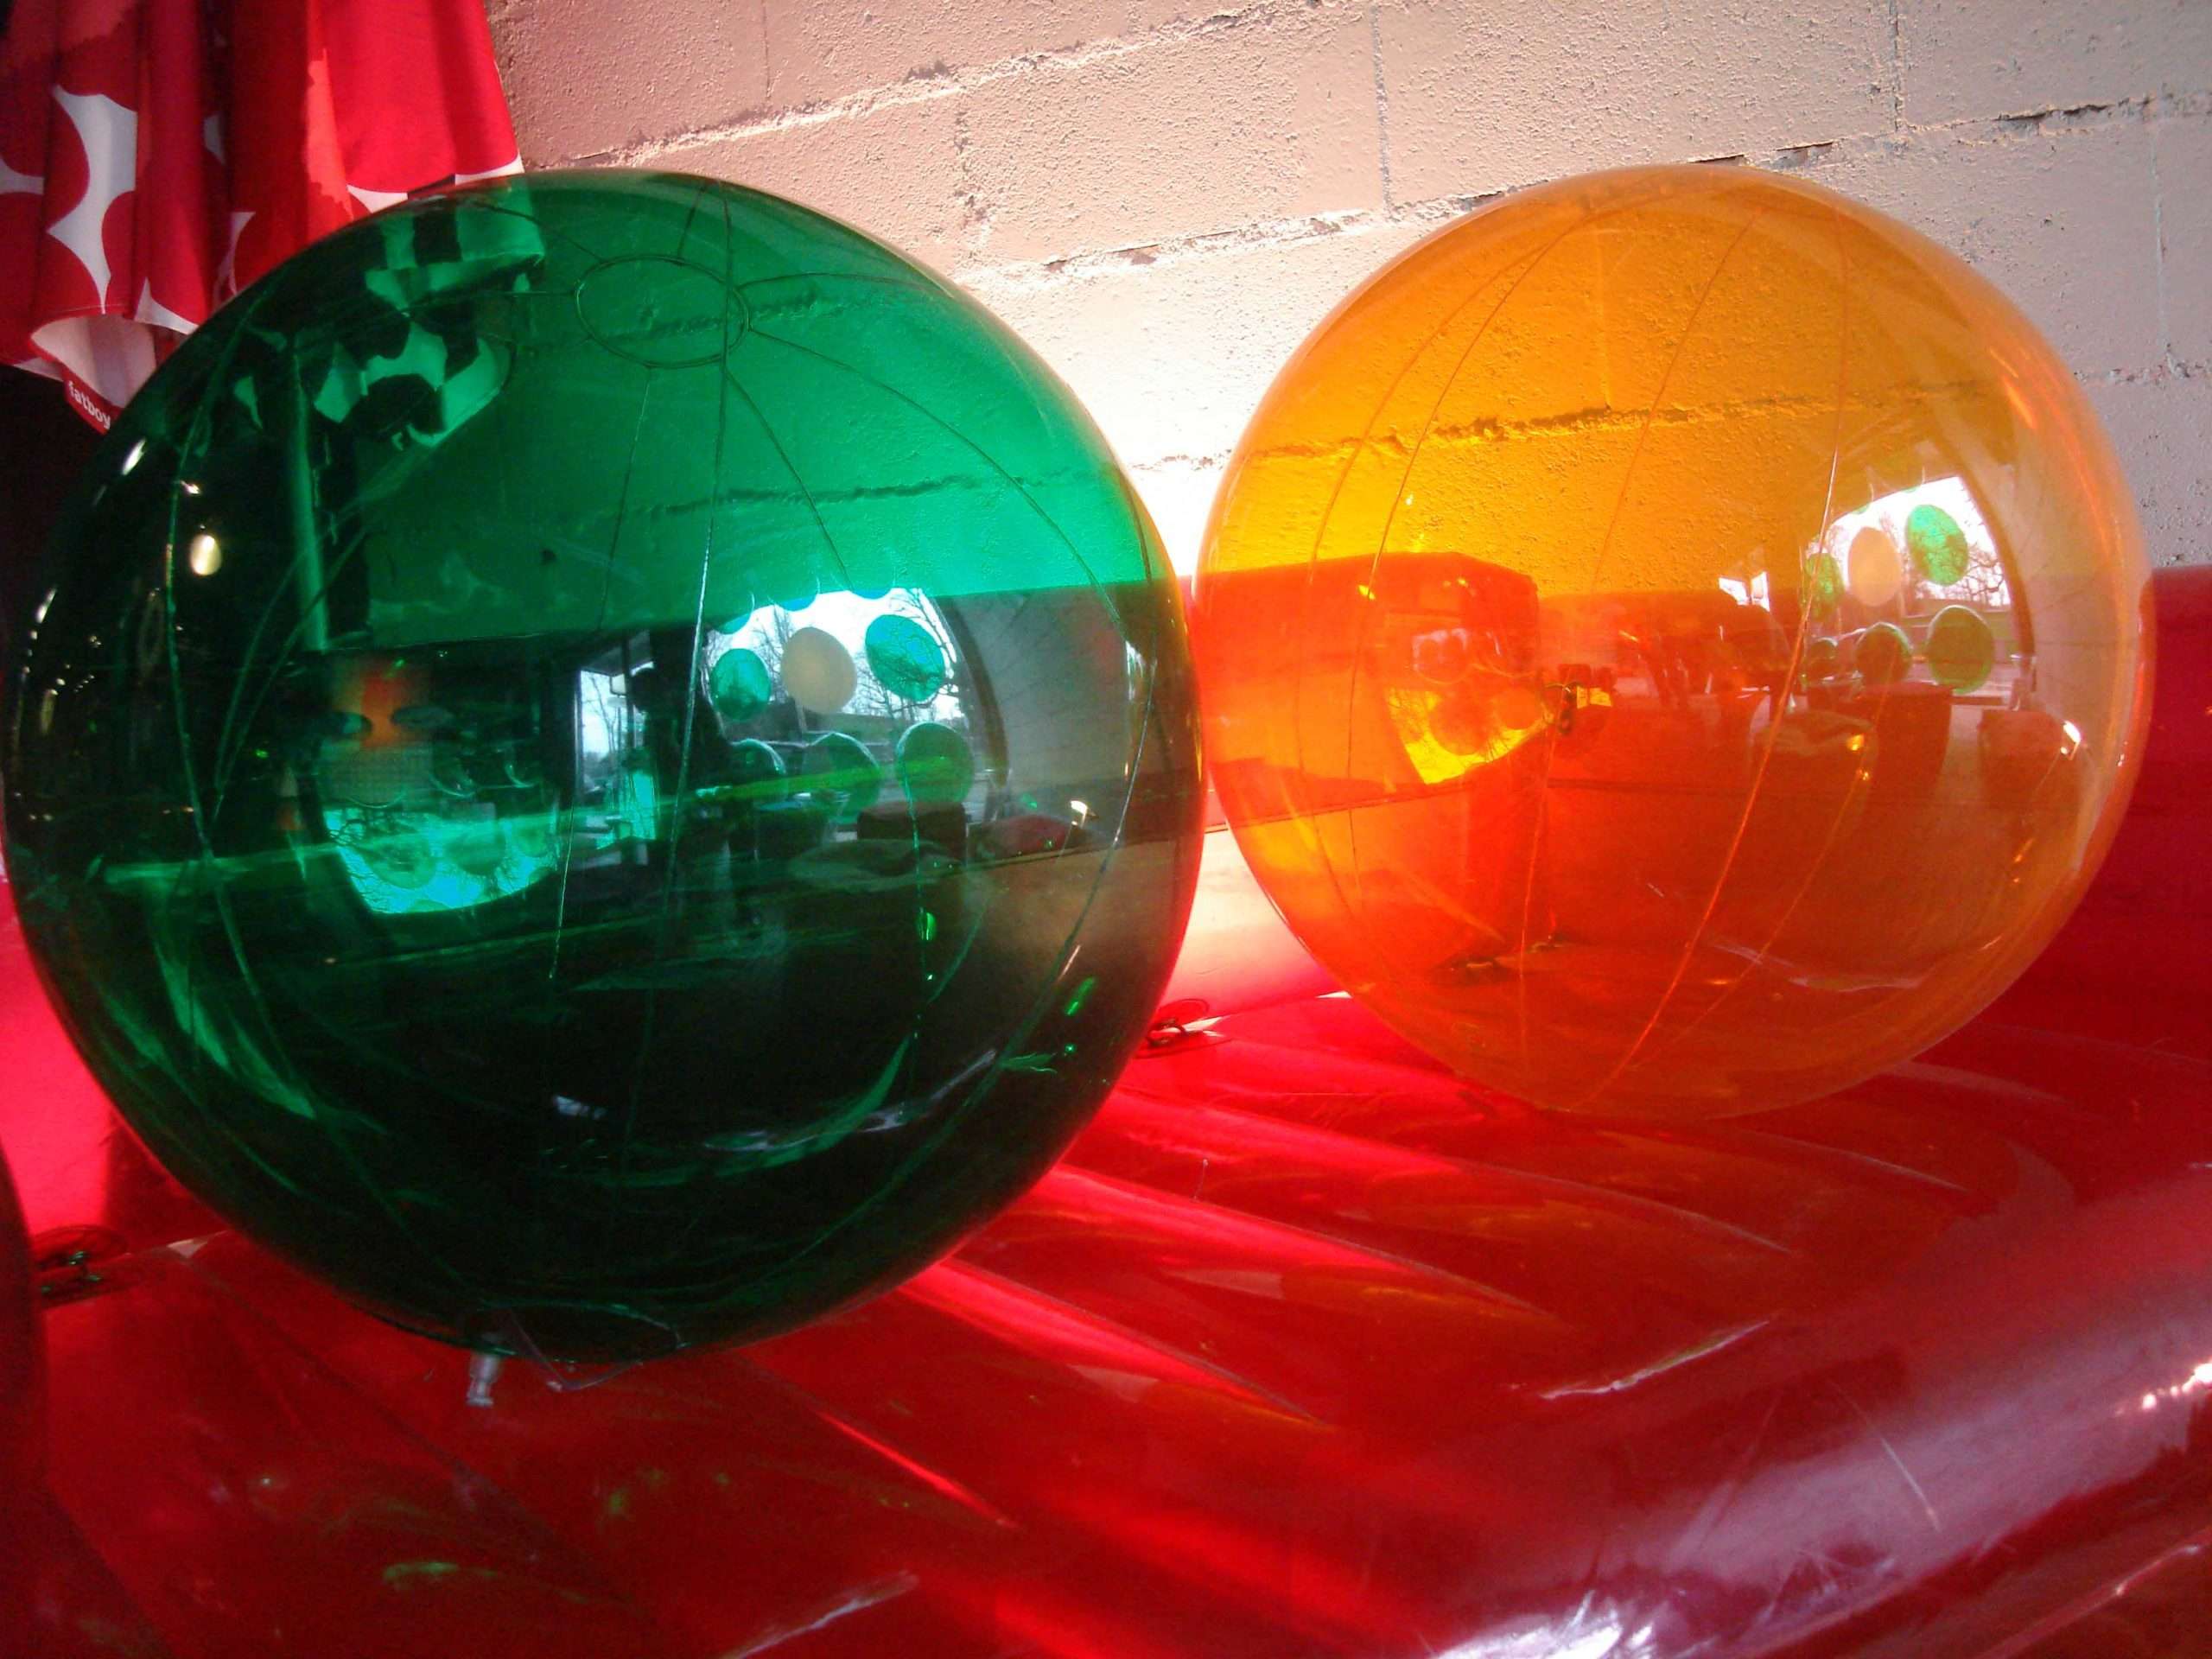 Walking waterball à vendre, bulles gonflables géantes.